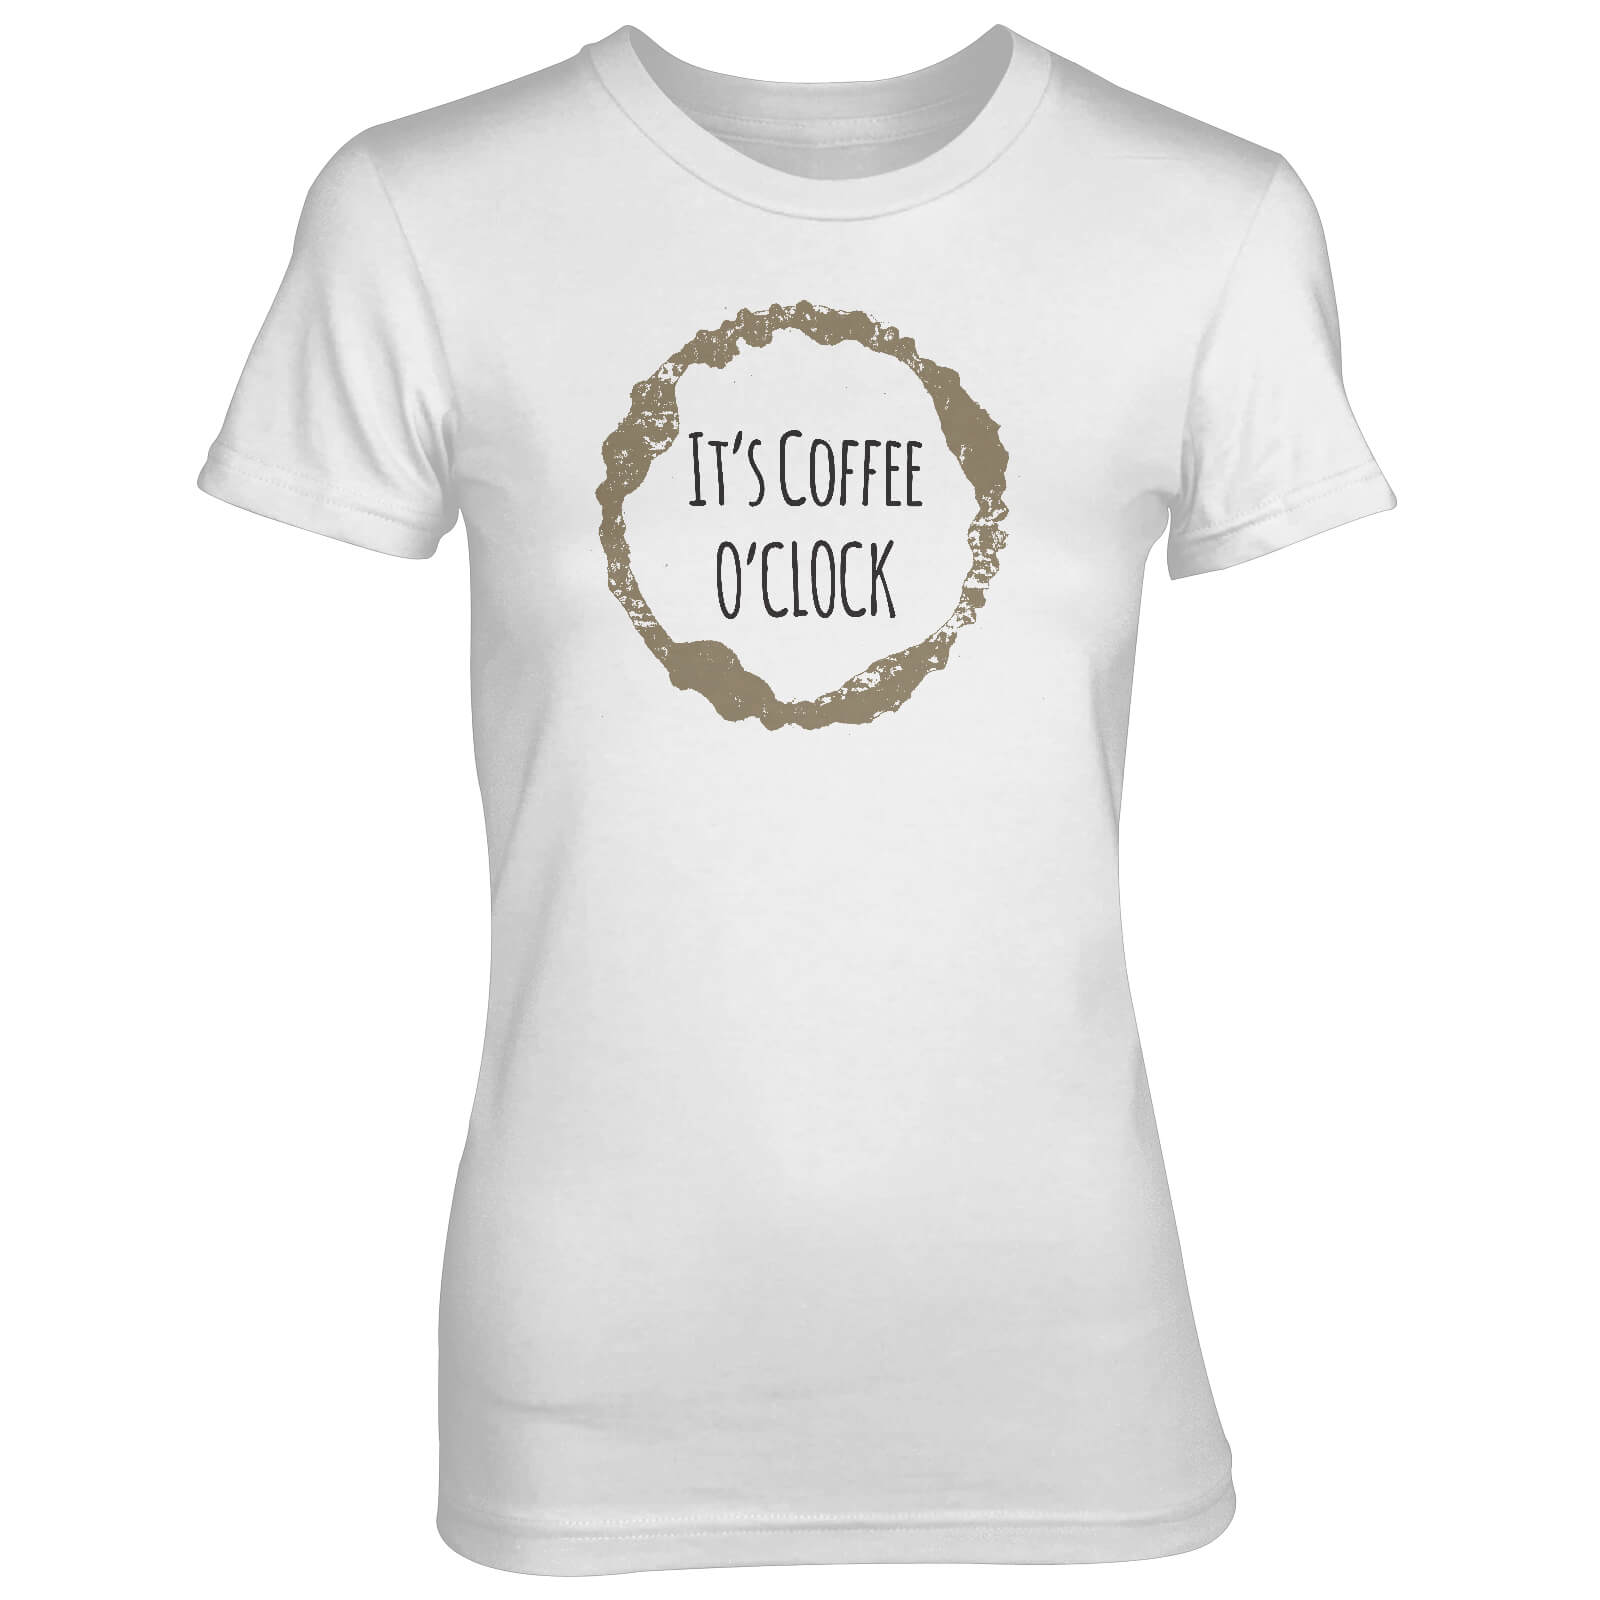 It's Coffee O'Clock Women's White T-Shirt - S - White